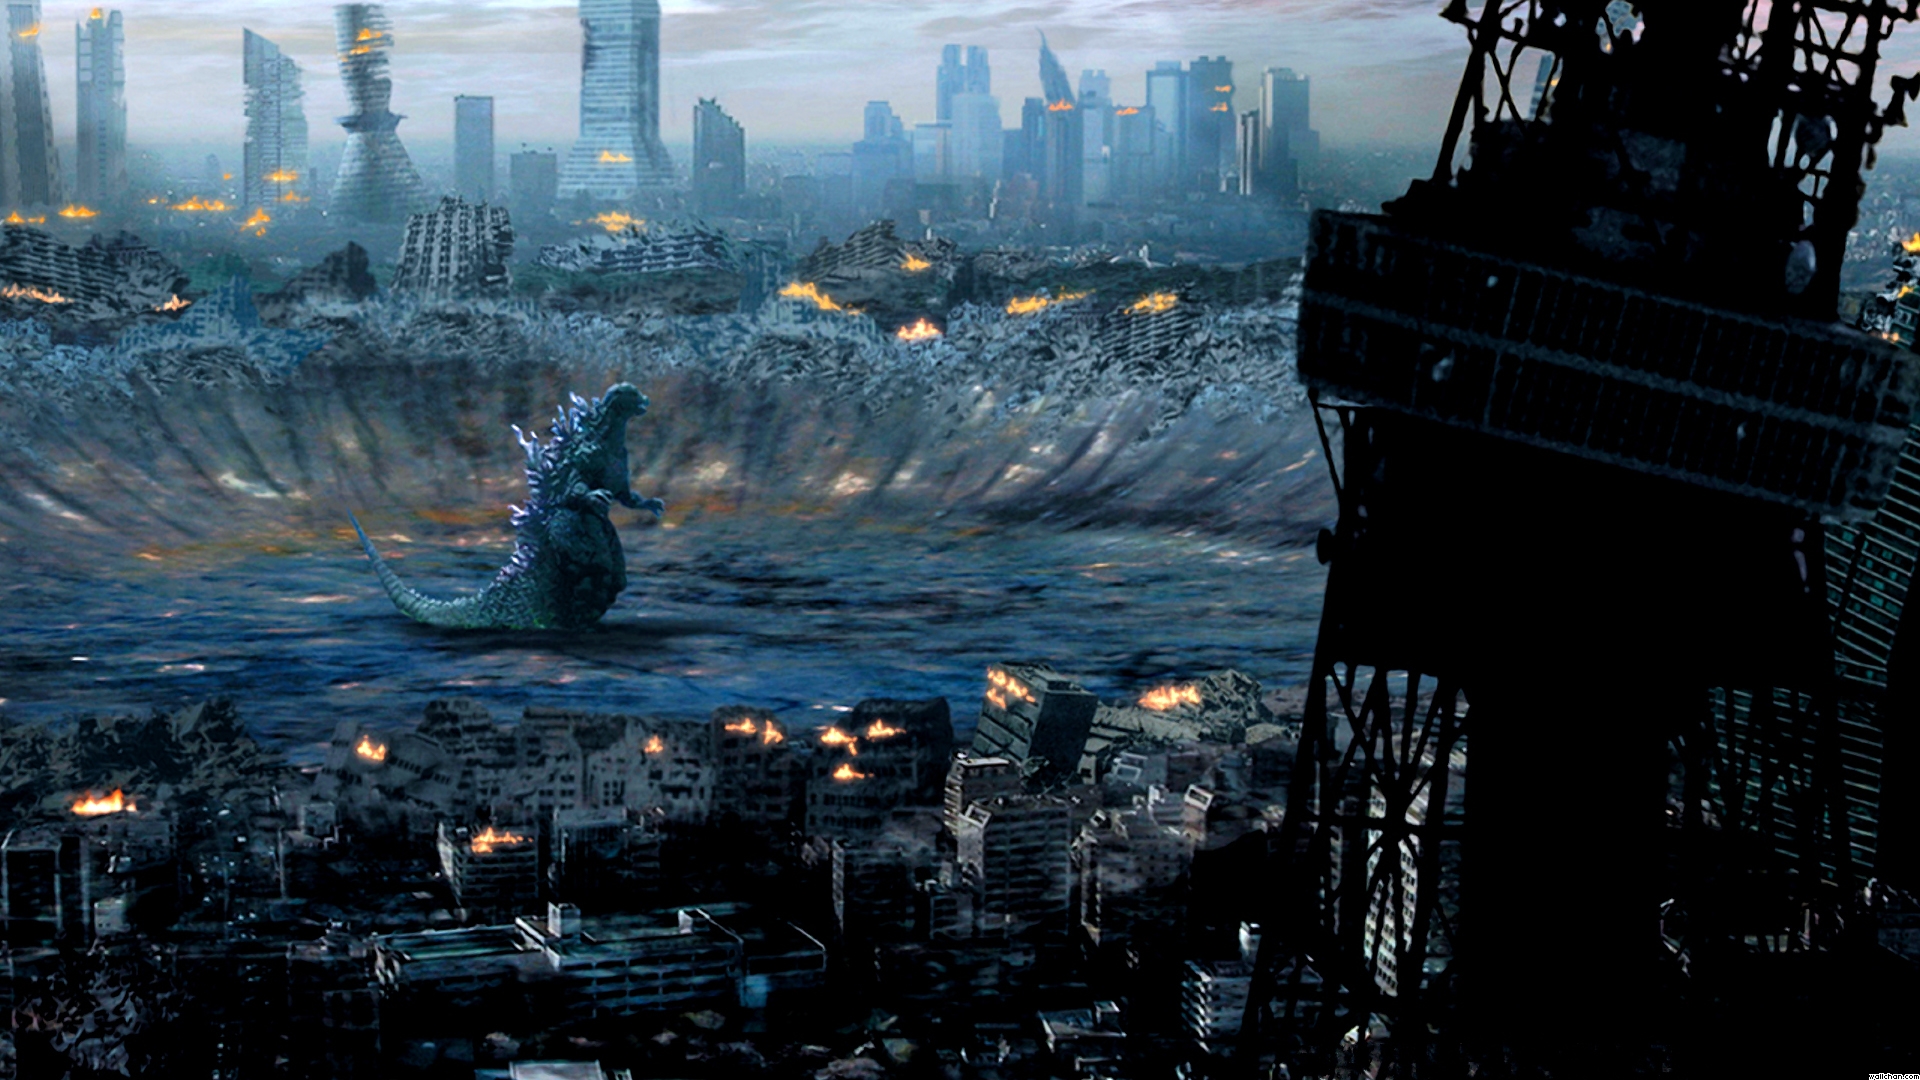 Baixar papel de parede para celular de Godzilla, Fantasia gratuito.